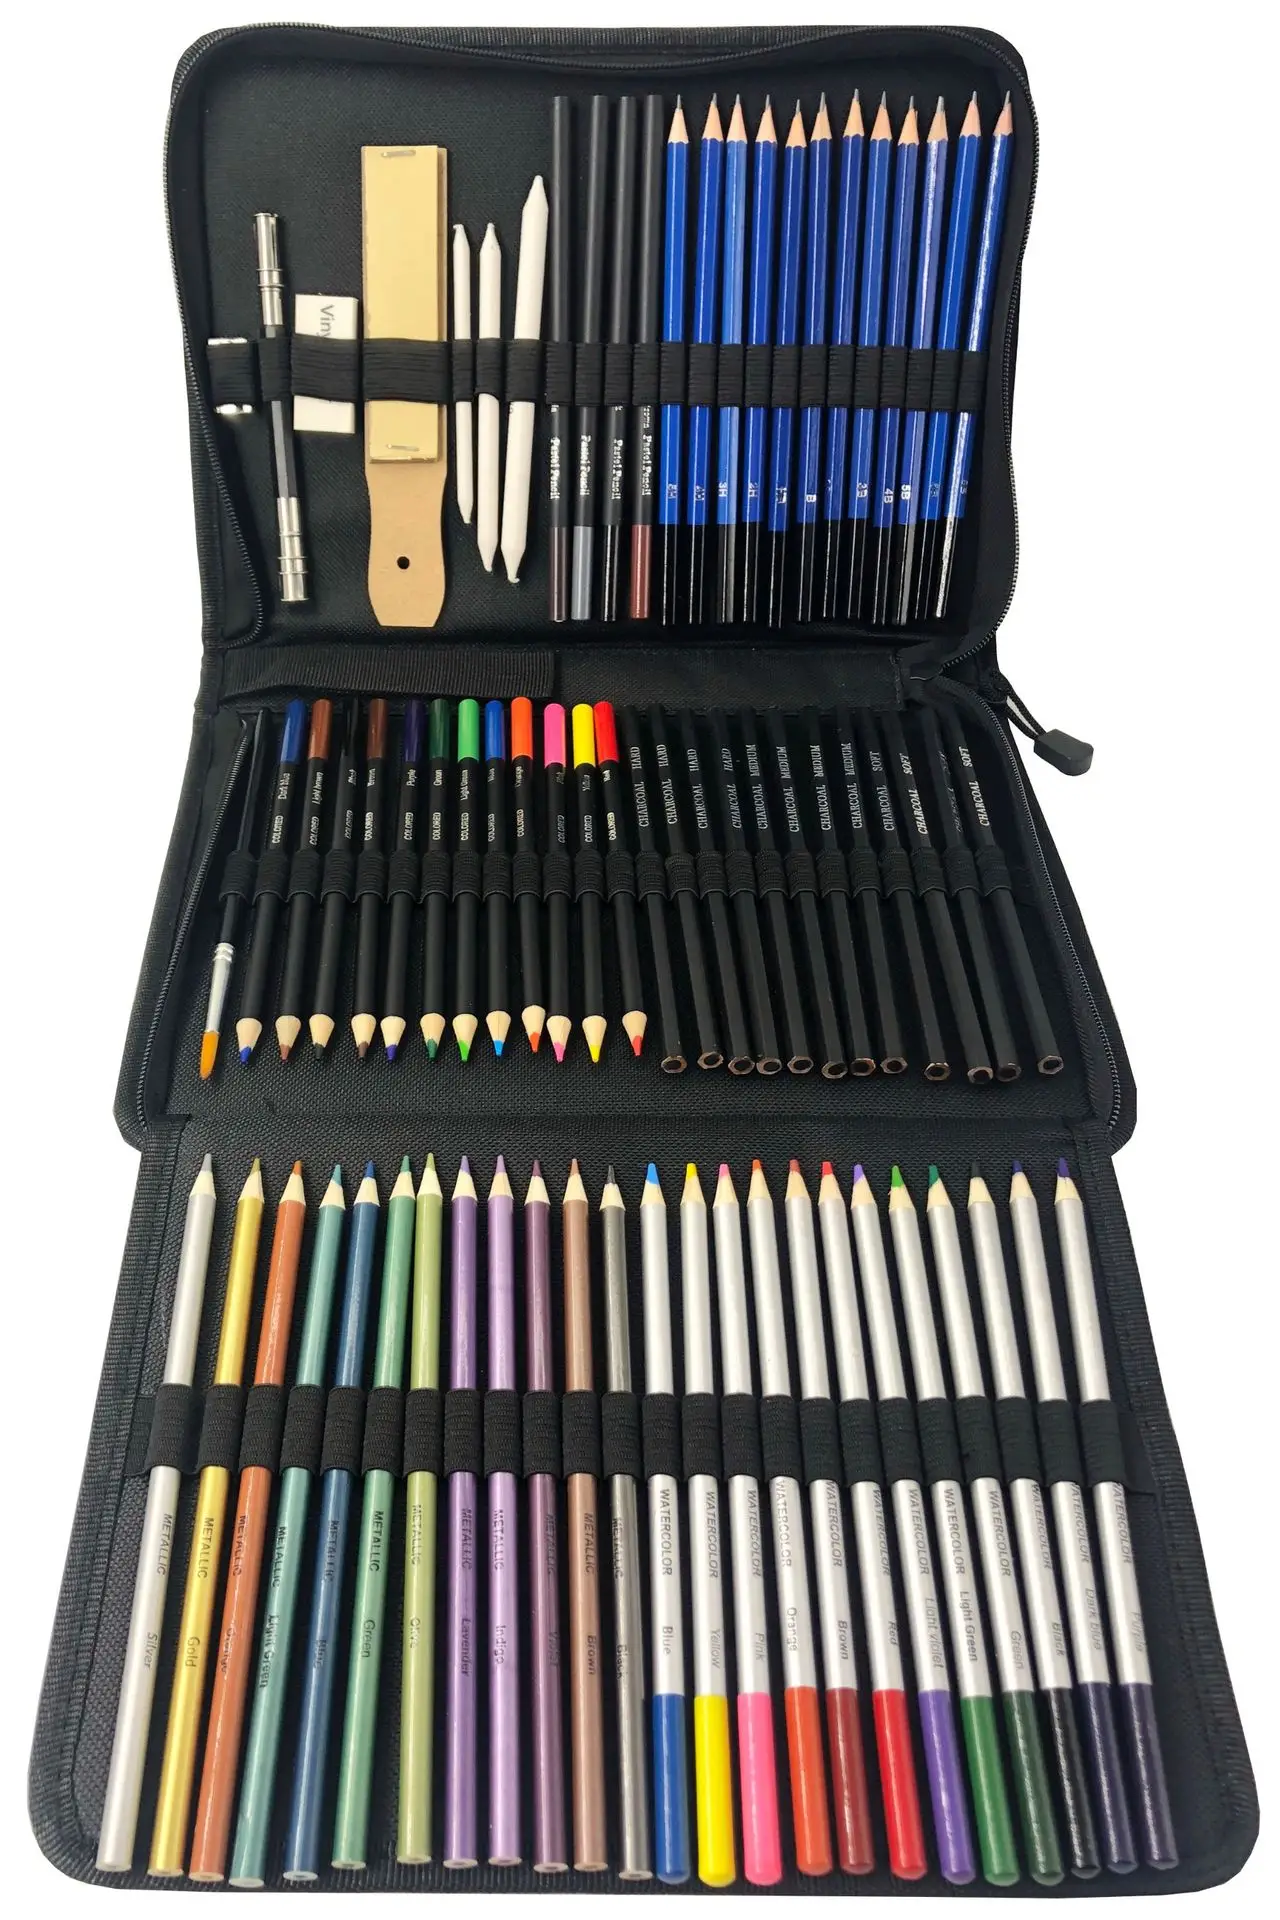 https://ae01.alicdn.com/kf/Sa861d474da0840bd9c76e856fd4c28fe9/Pro-Drawing-Kit-Sketching-Pencils-Set-Portable-Zippered-Travel-Case-Charcoal-Pencils-Sketch-Pencils-Charcoal-Stick.jpg